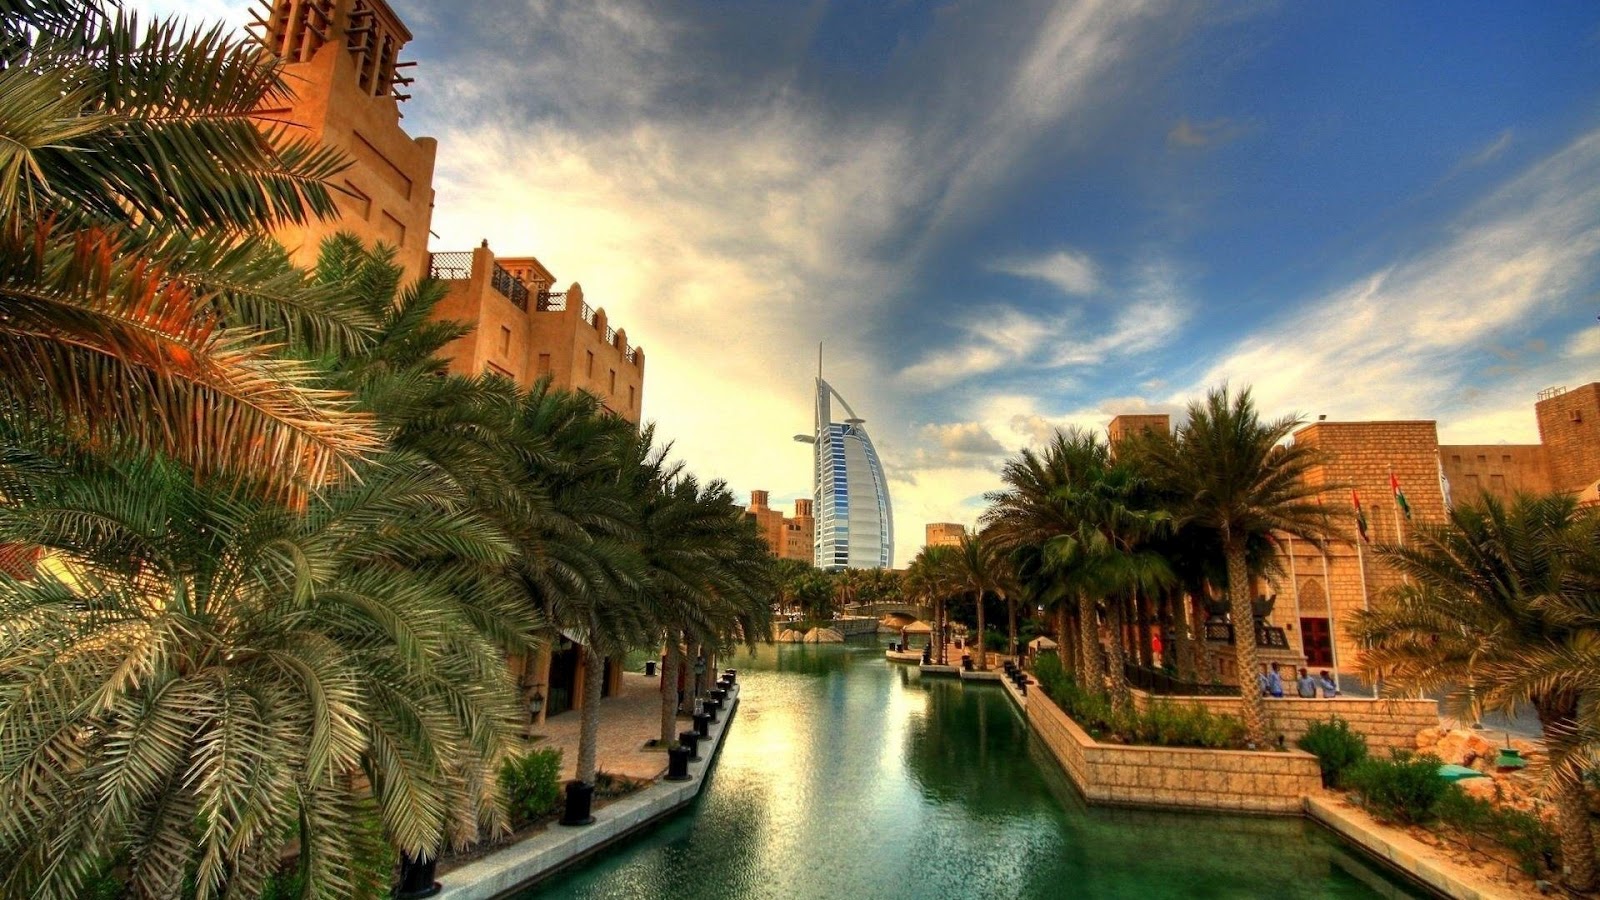 Dubai Architecture | Full HD Desktop Wallpapers 1080p